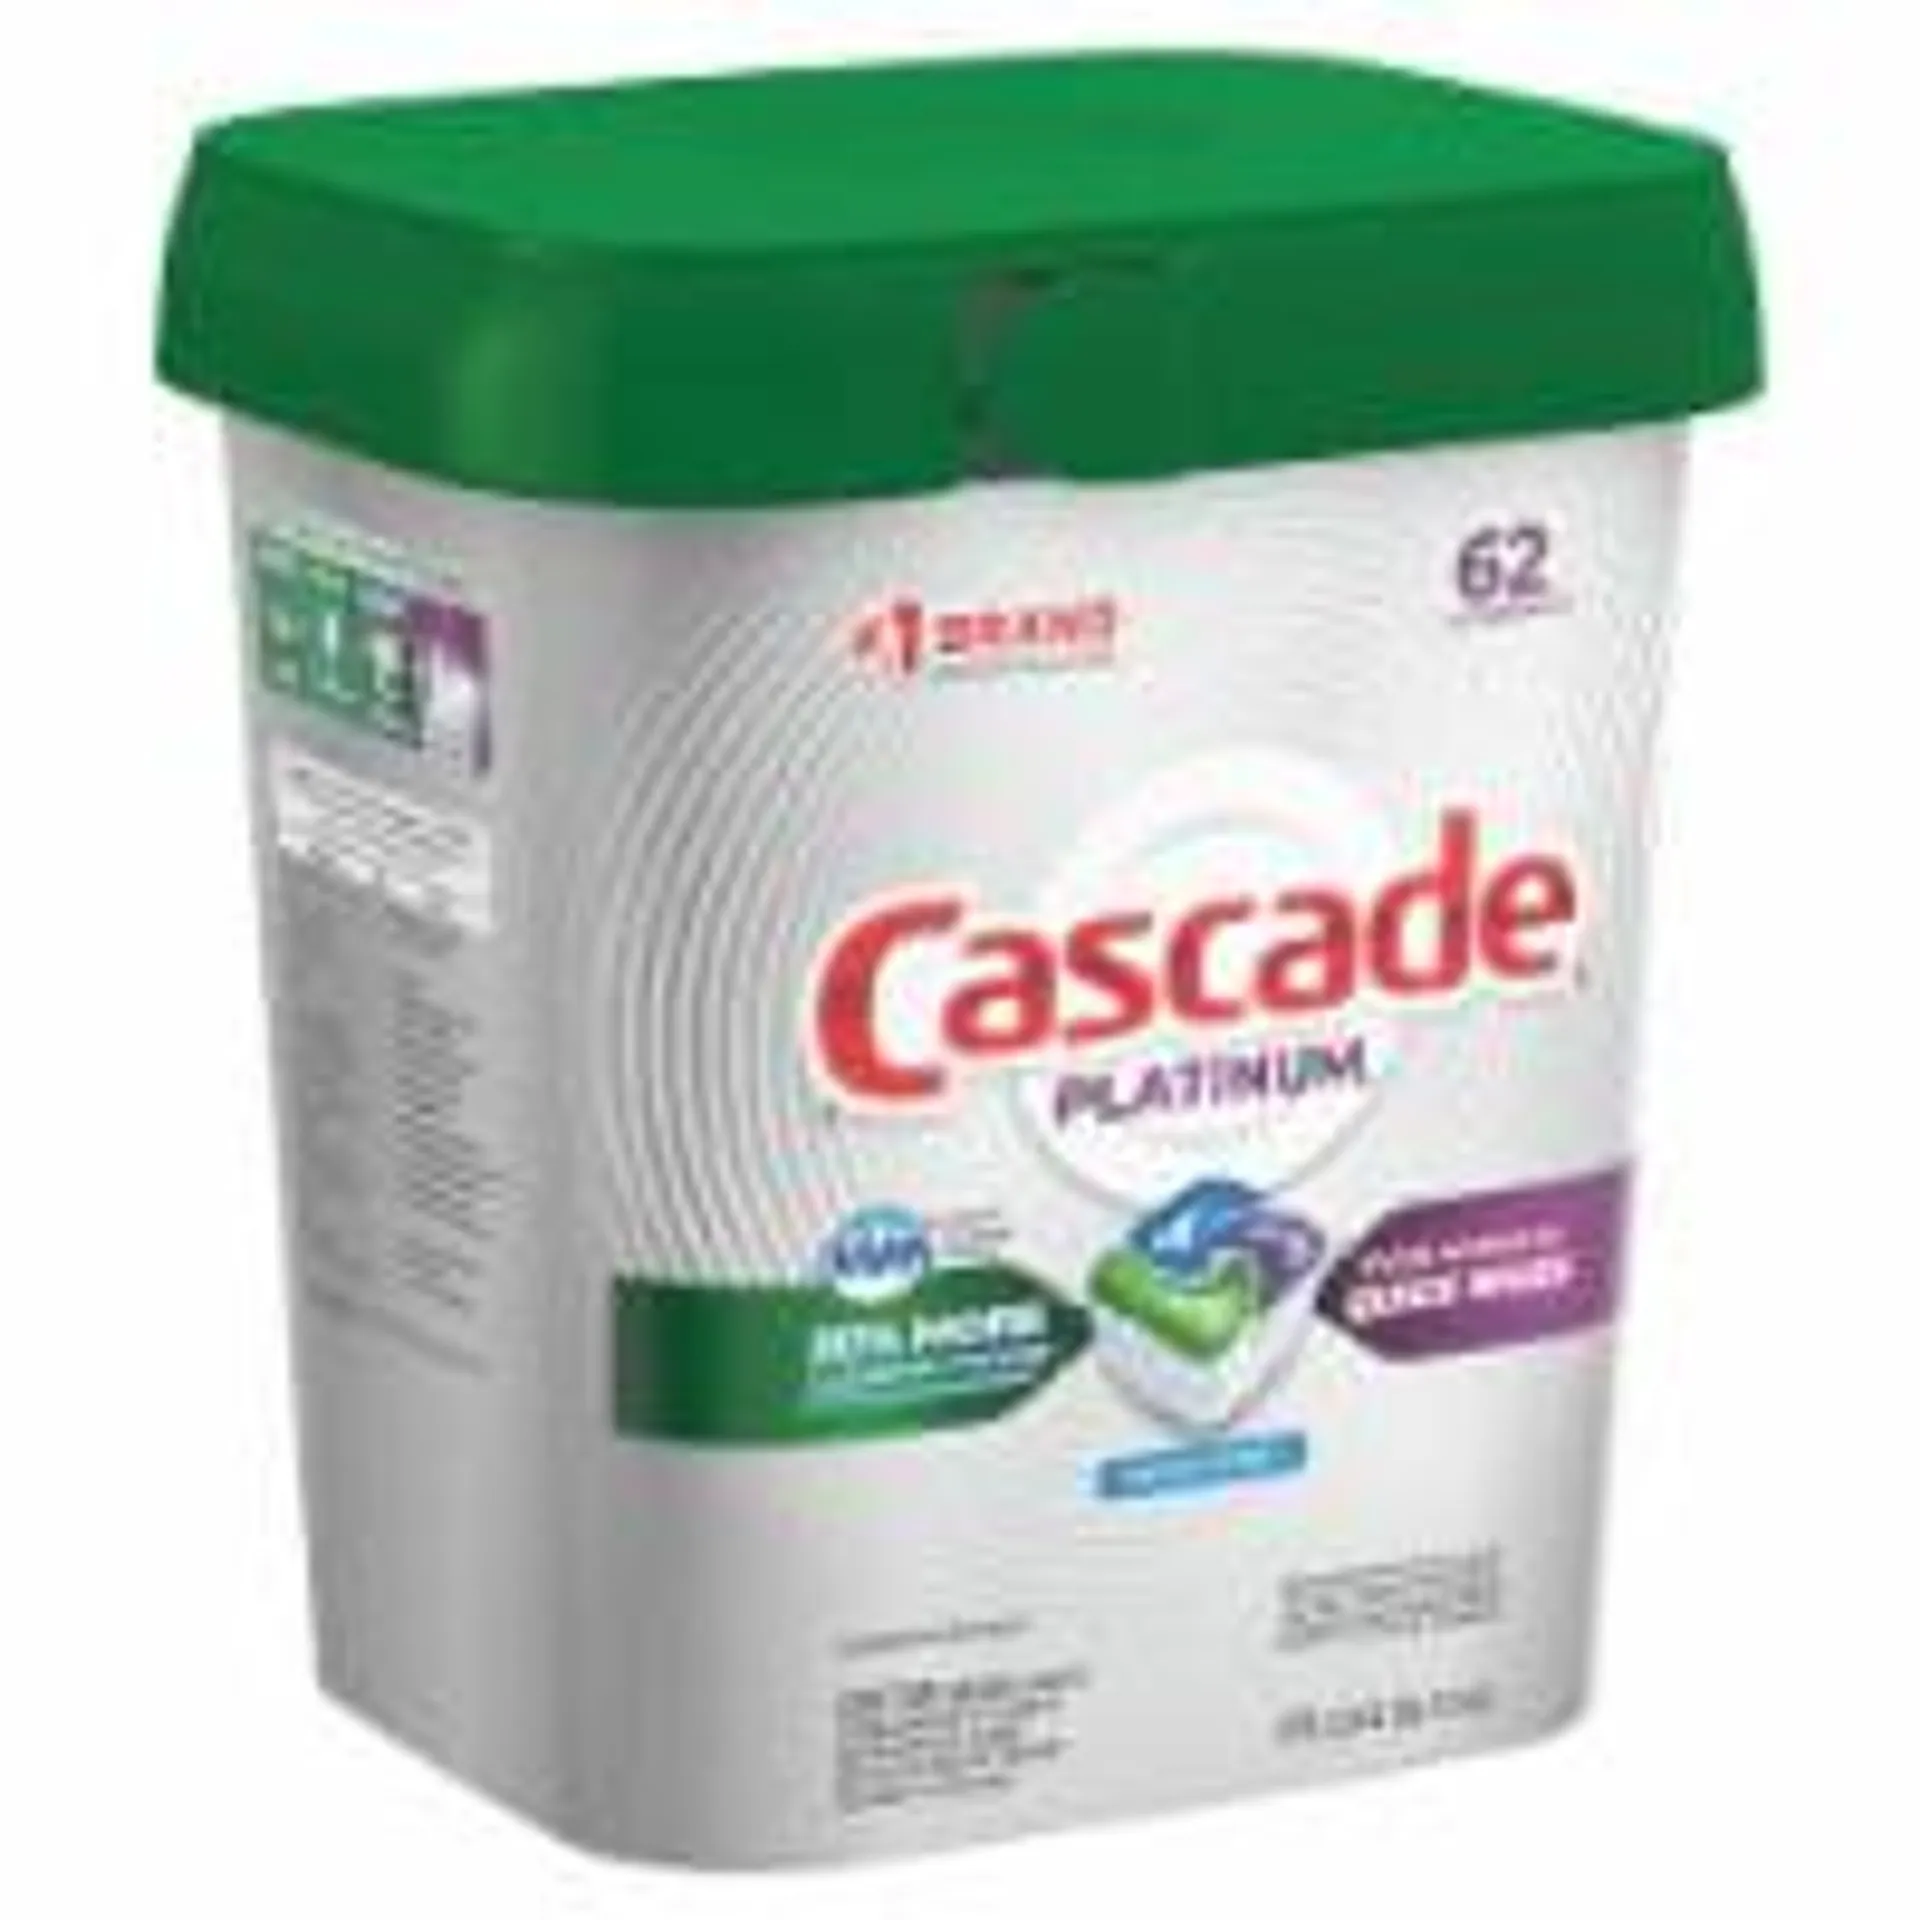 Cascade Platinum ActionPacs Fresh Scent Dishwasher Detergent